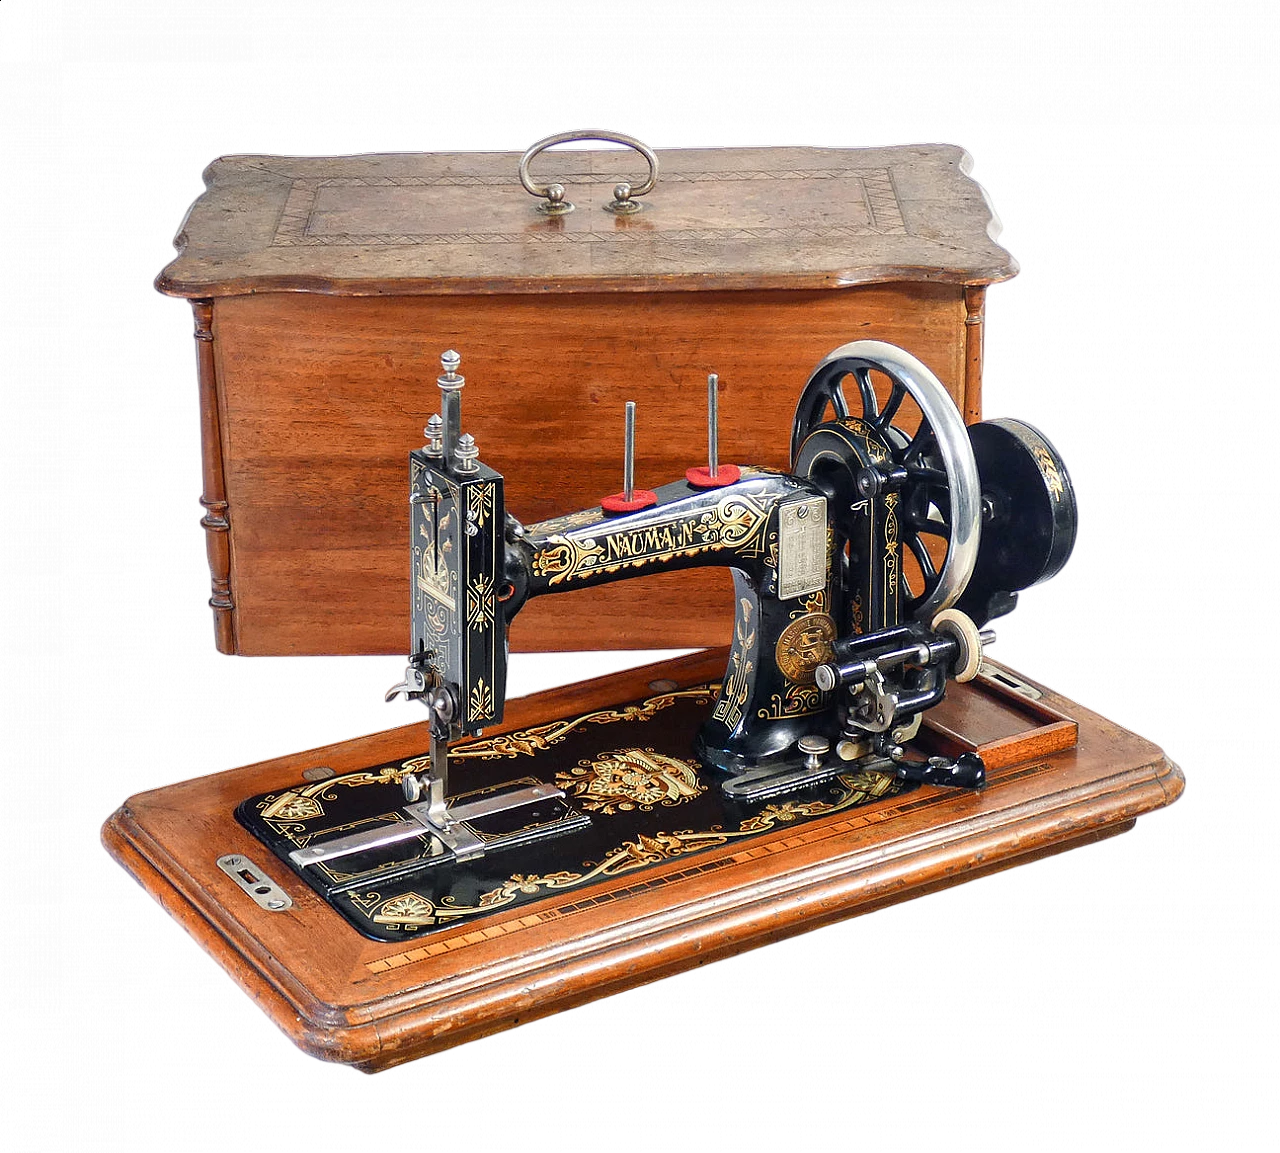 Naumann portable sewing machine, early 20th century 19